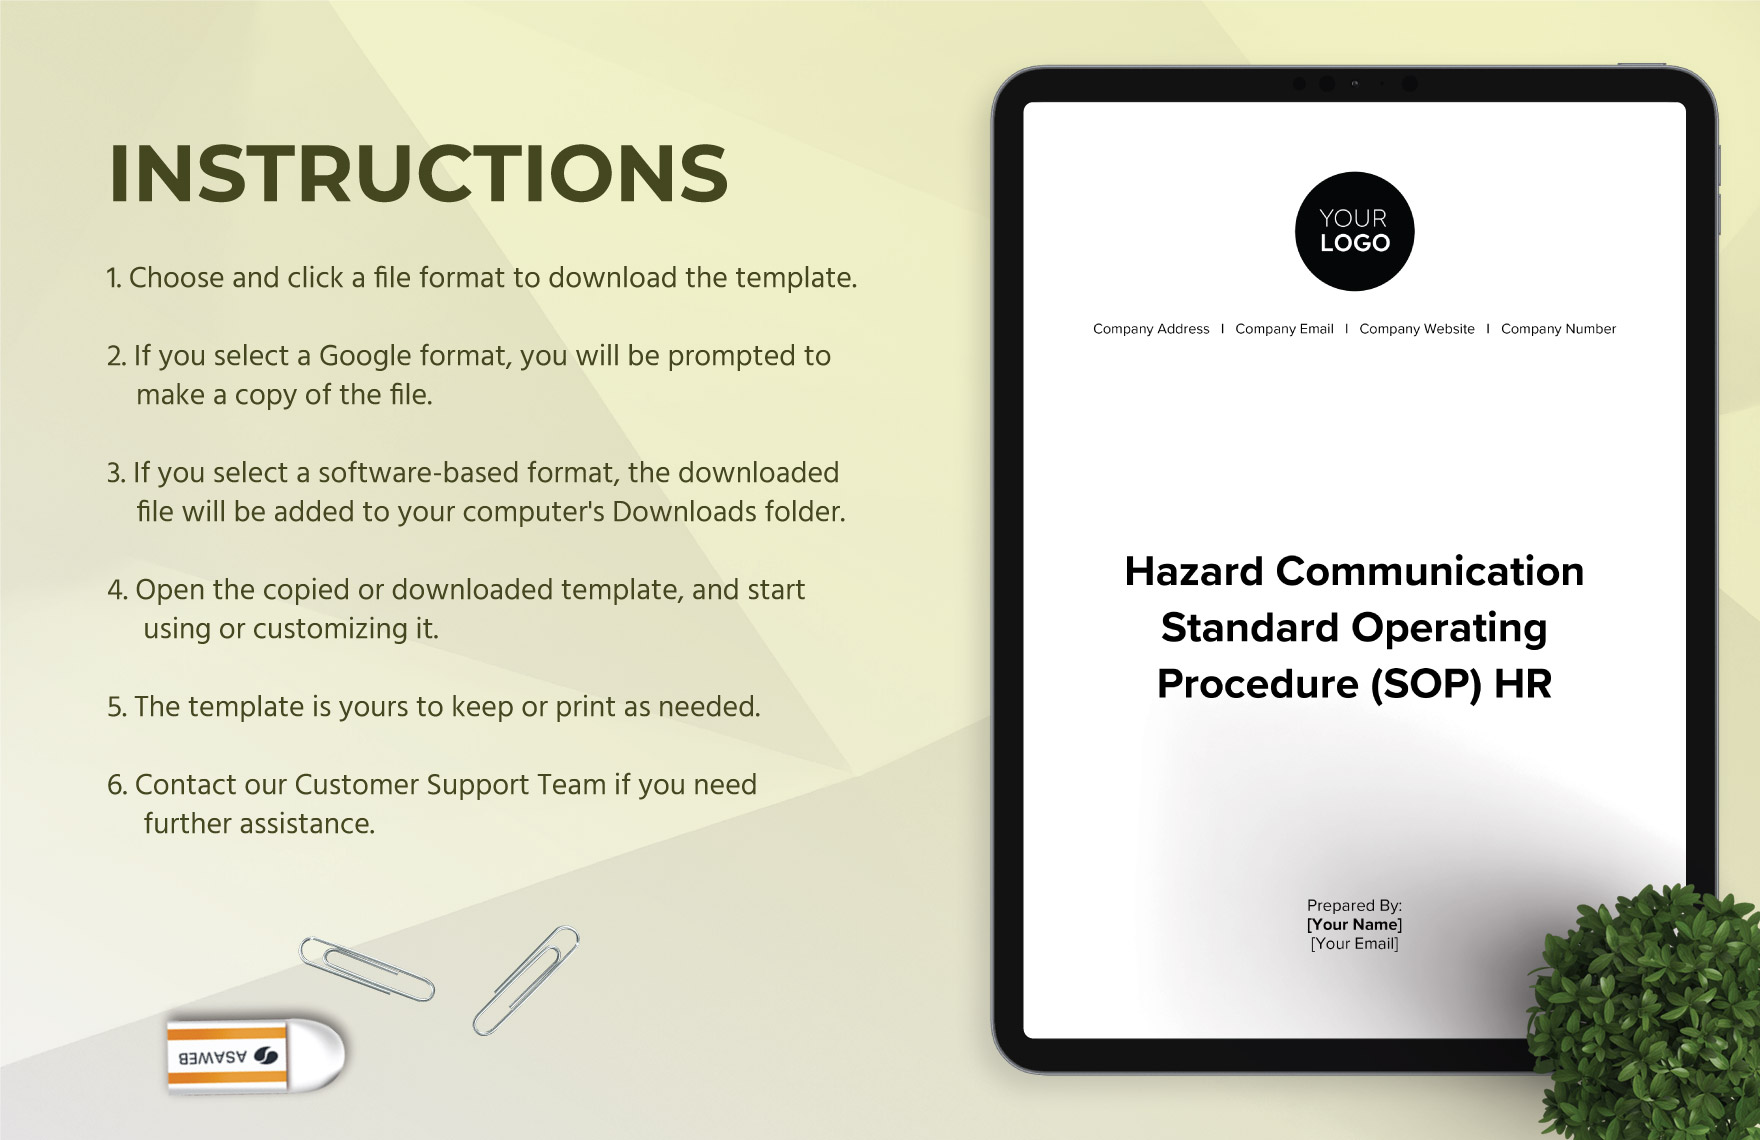 Hazard Communication Standard Operating Procedure (SOP) HR Template